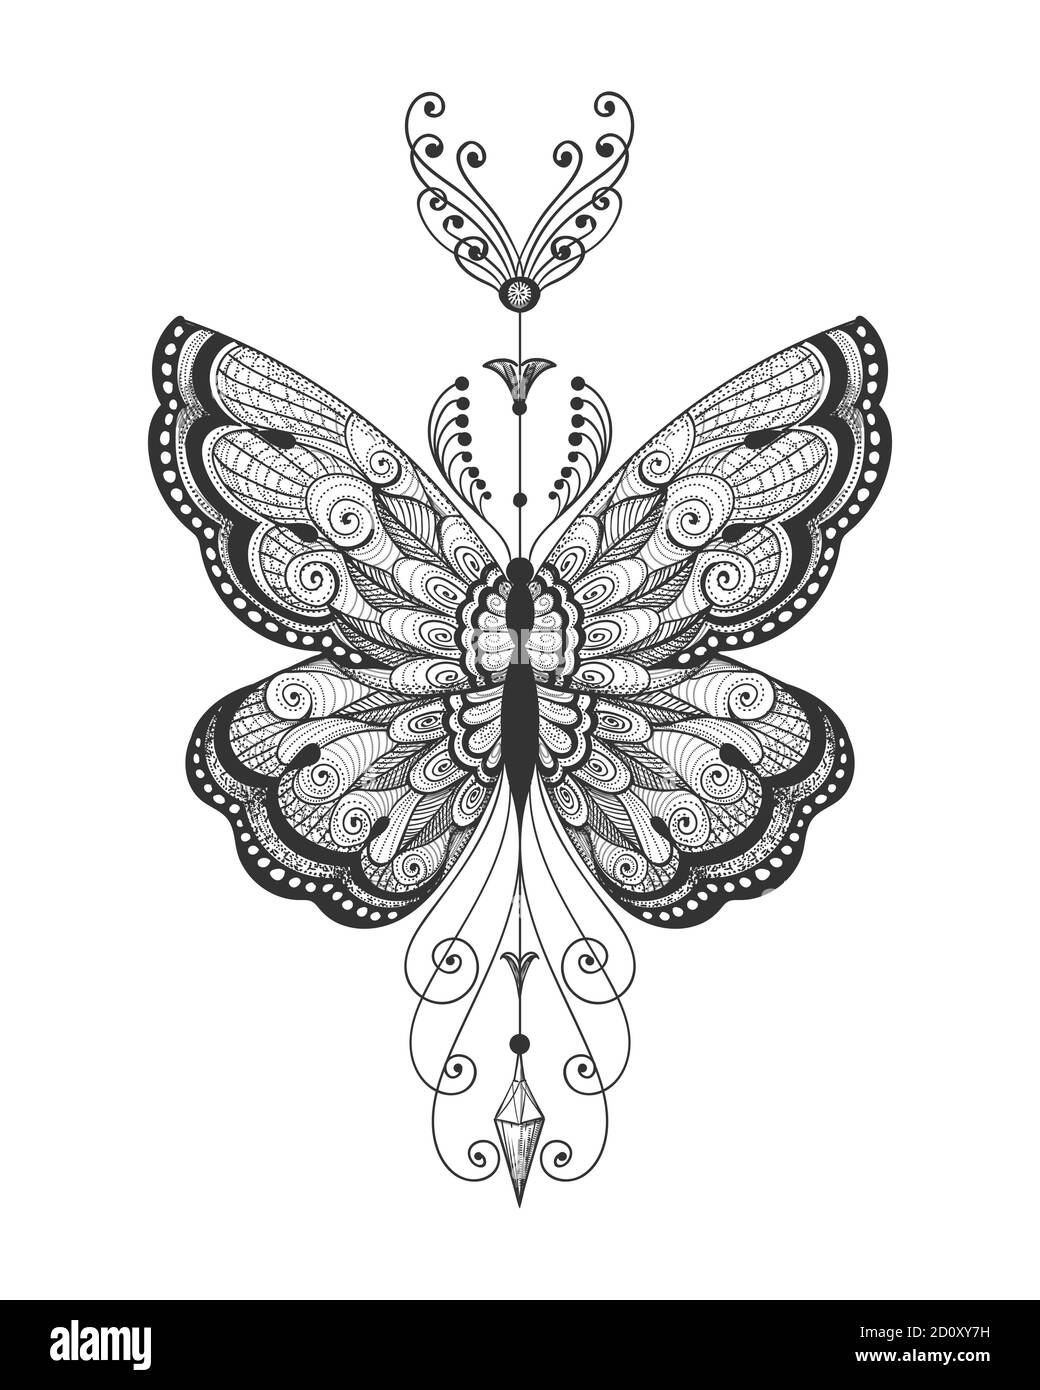 79 Beautiful Butterfly Wrist Tattoos